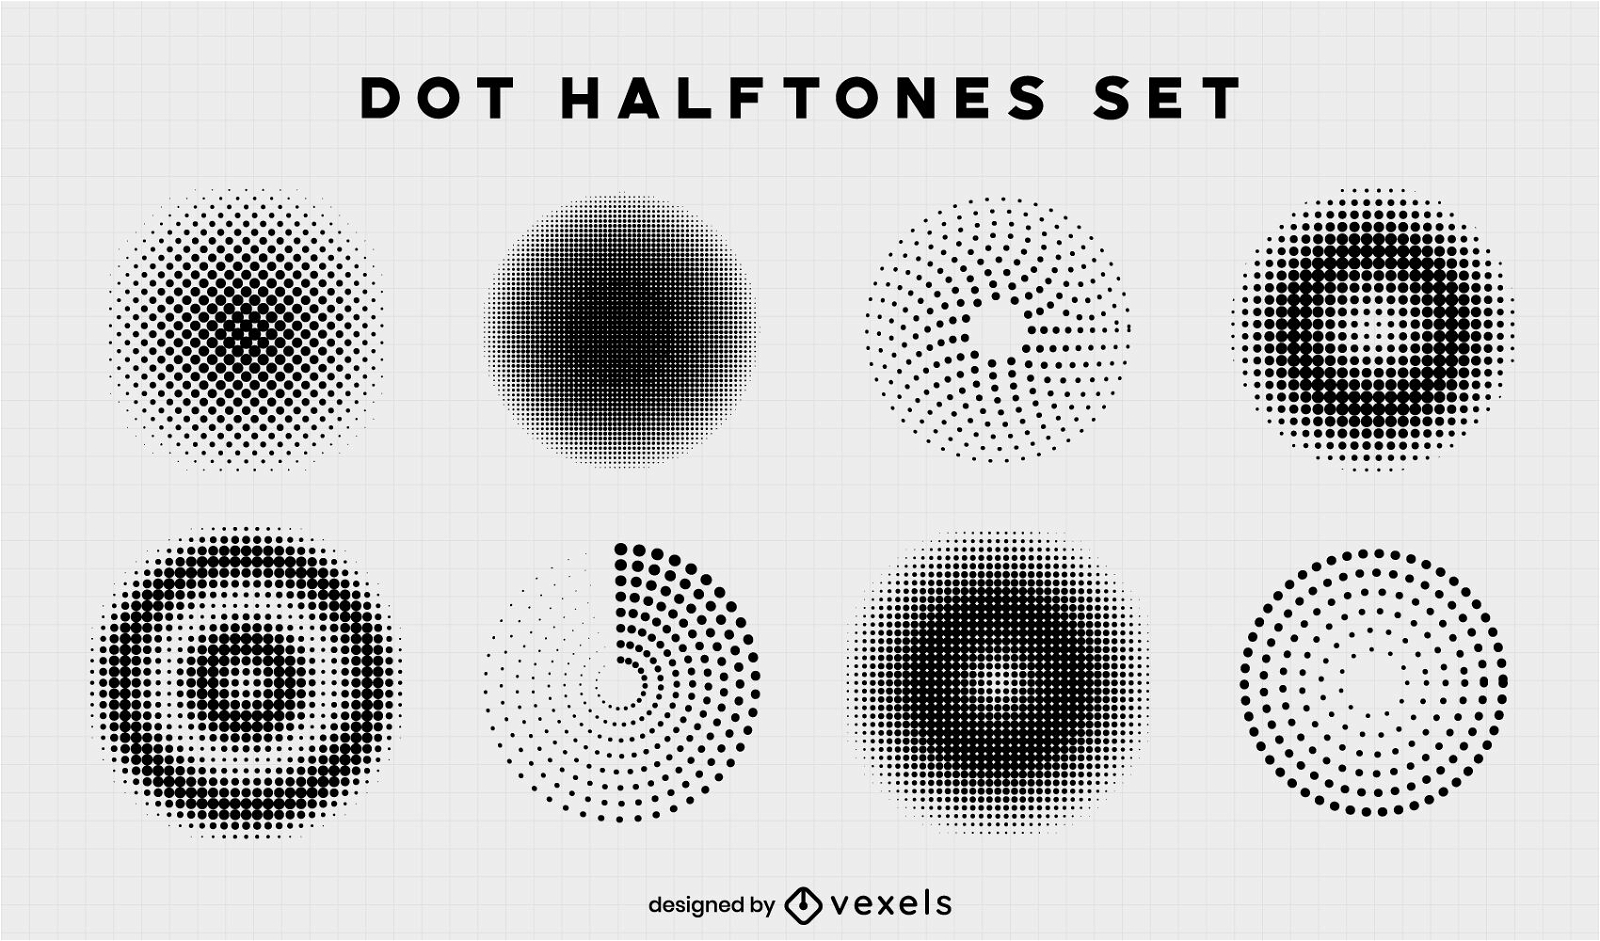 Dot halftones set